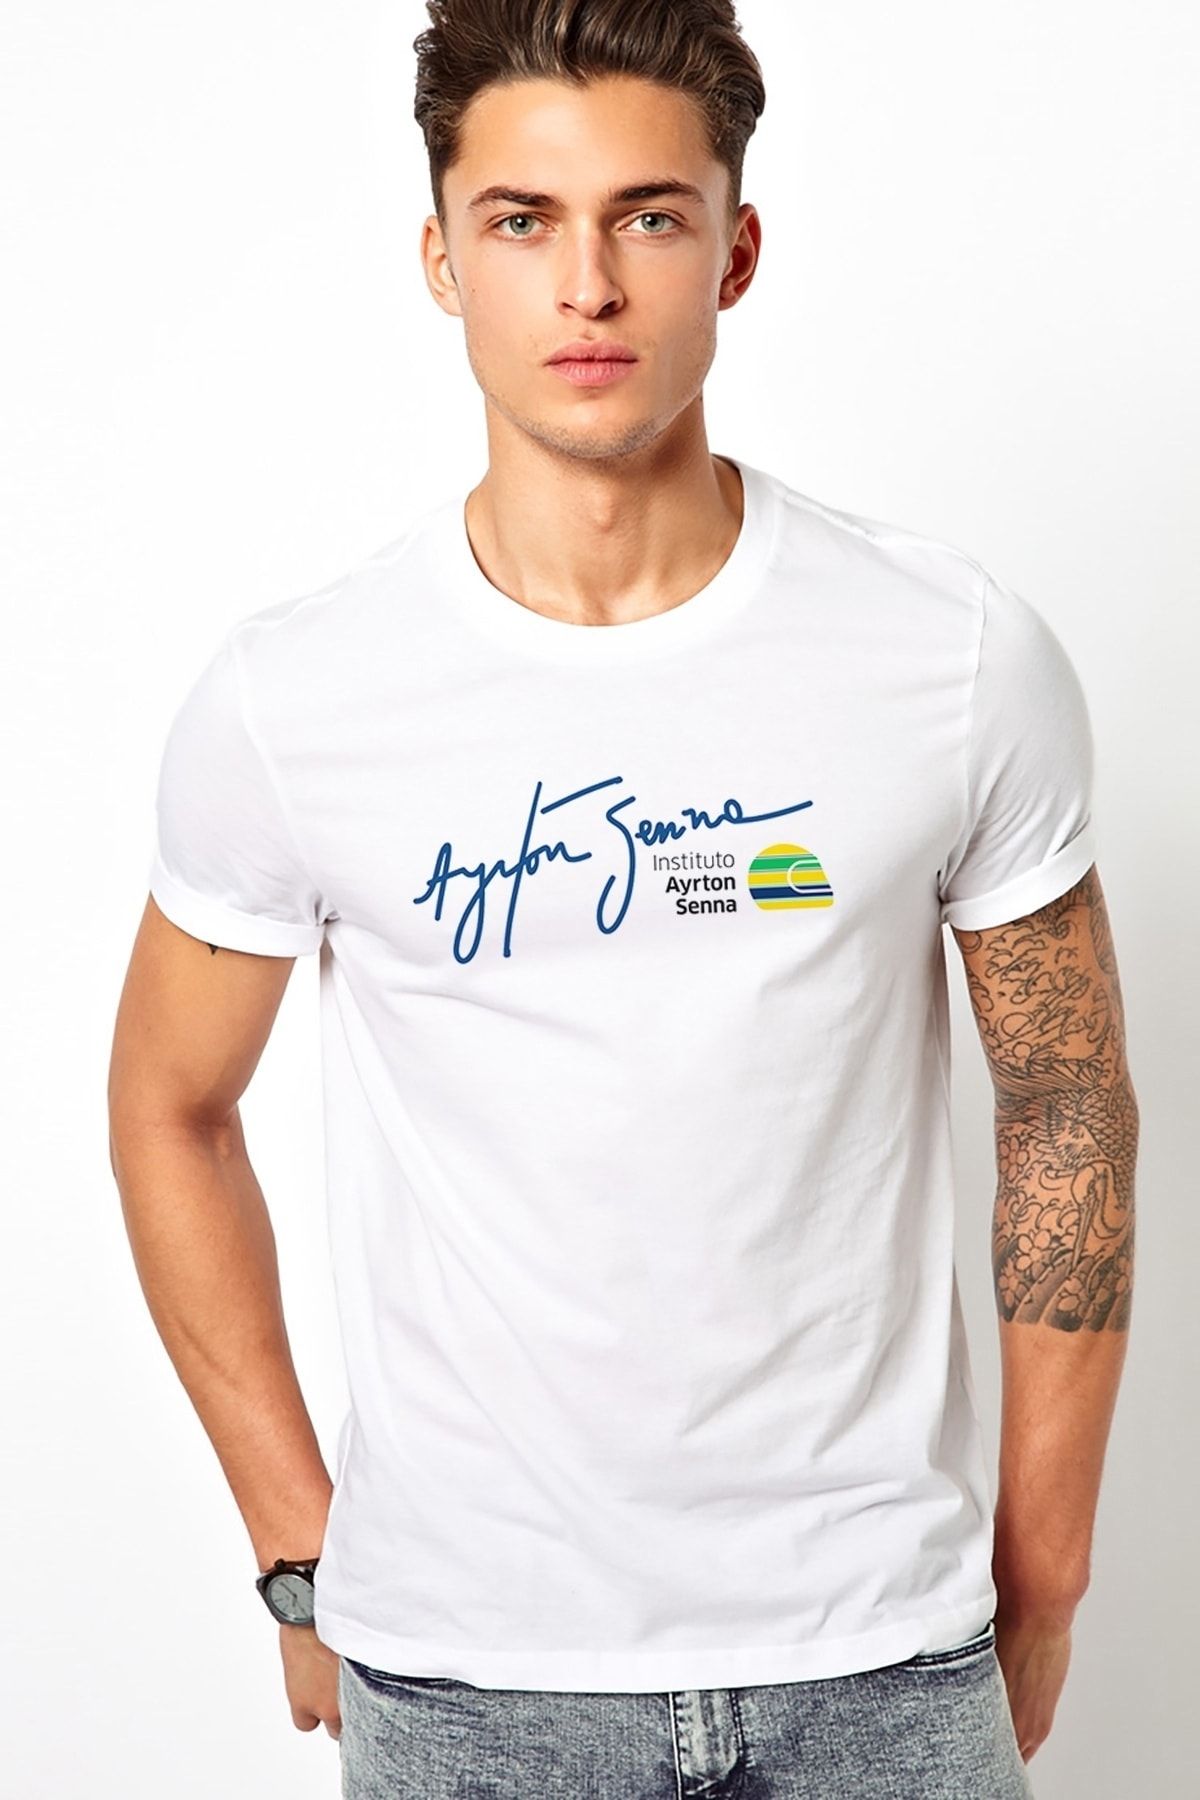 QIVI Senna Imzalı Logo Screen Shot 2018 Baskılı Beyaz Erkek Örme Tshirt